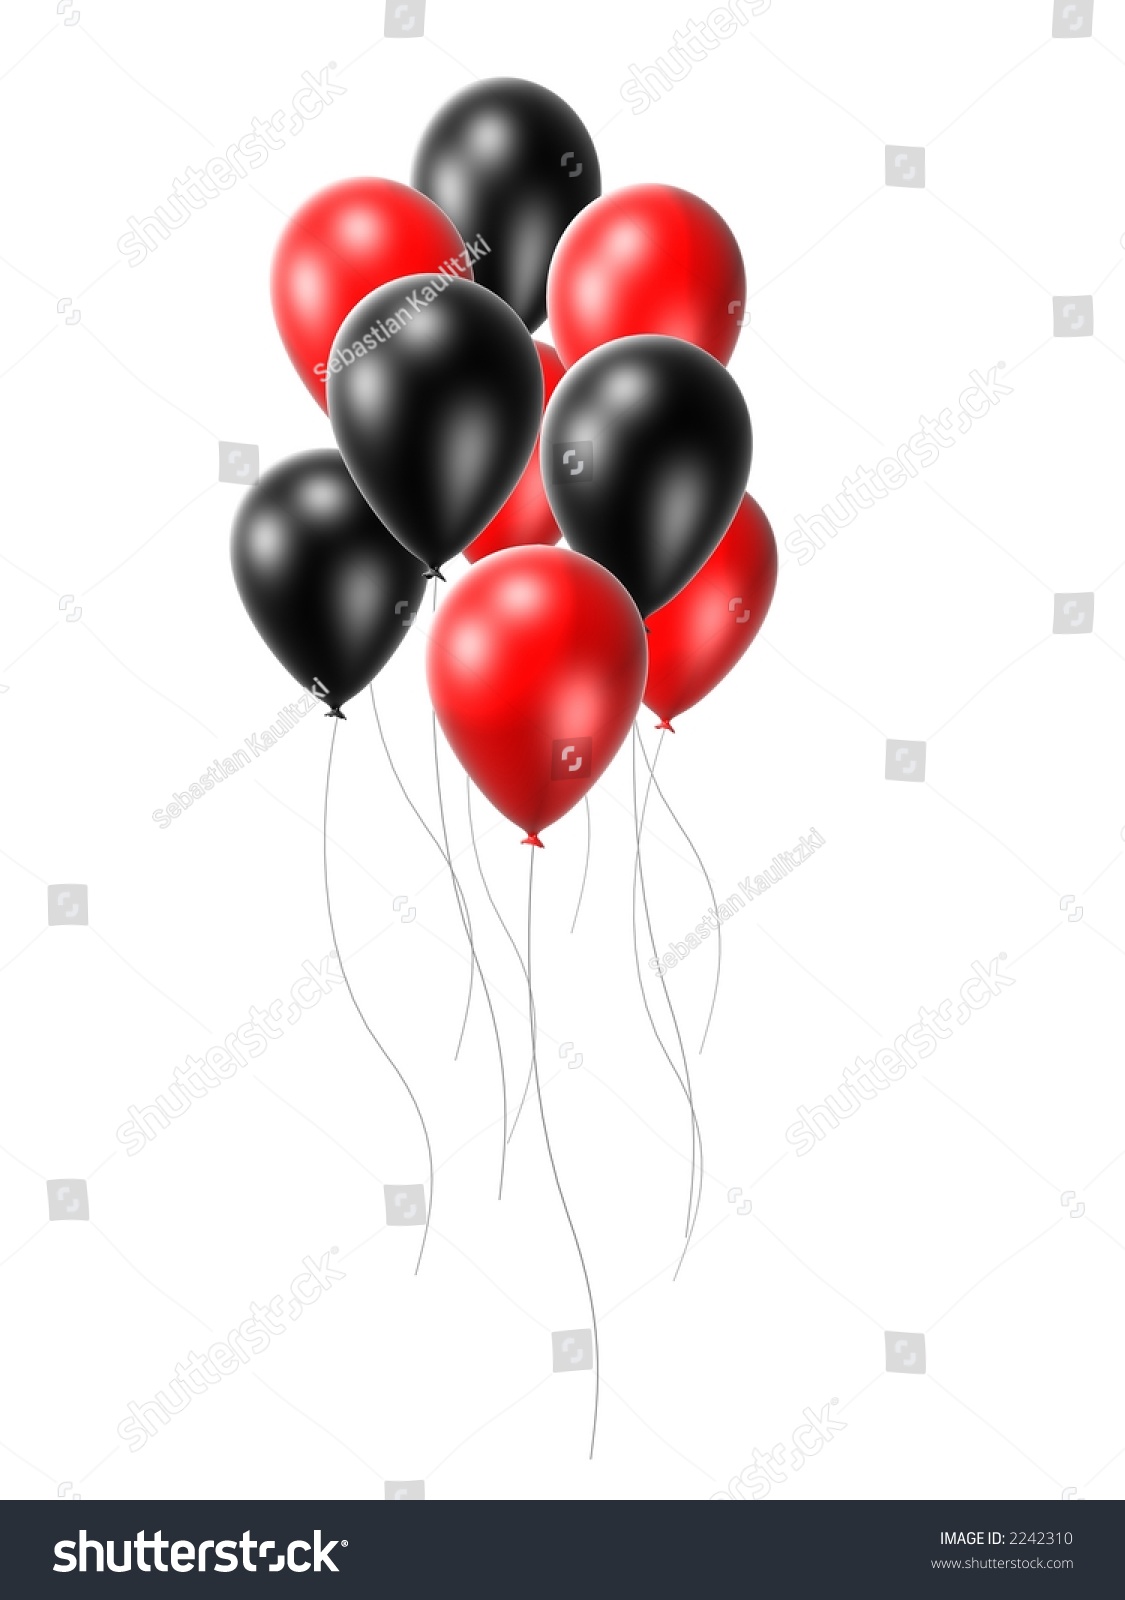 clip art balloons black - photo #49